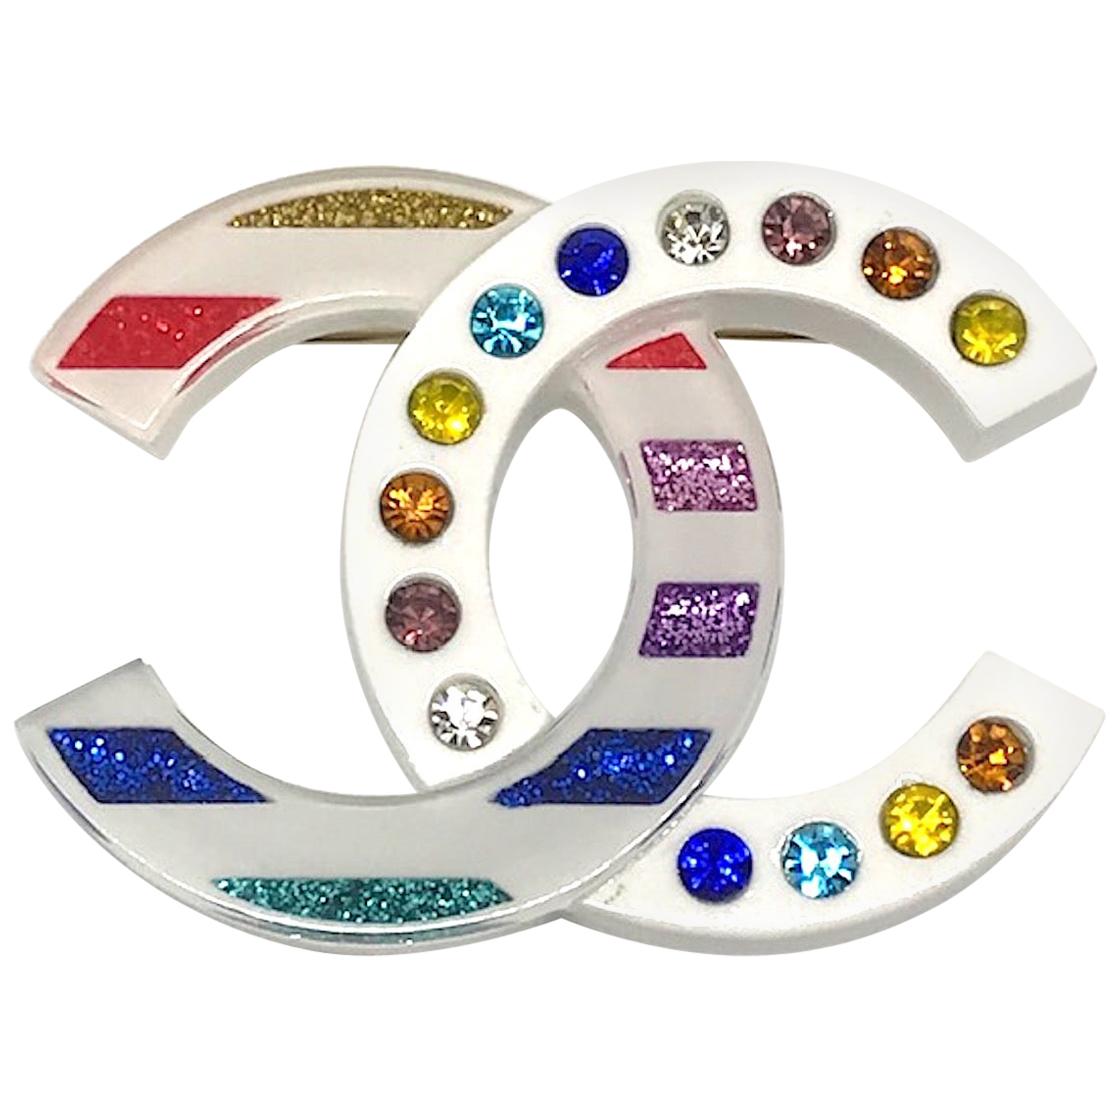 Chanel Multicolor Glitter Lucite Pin, 2019 Collection